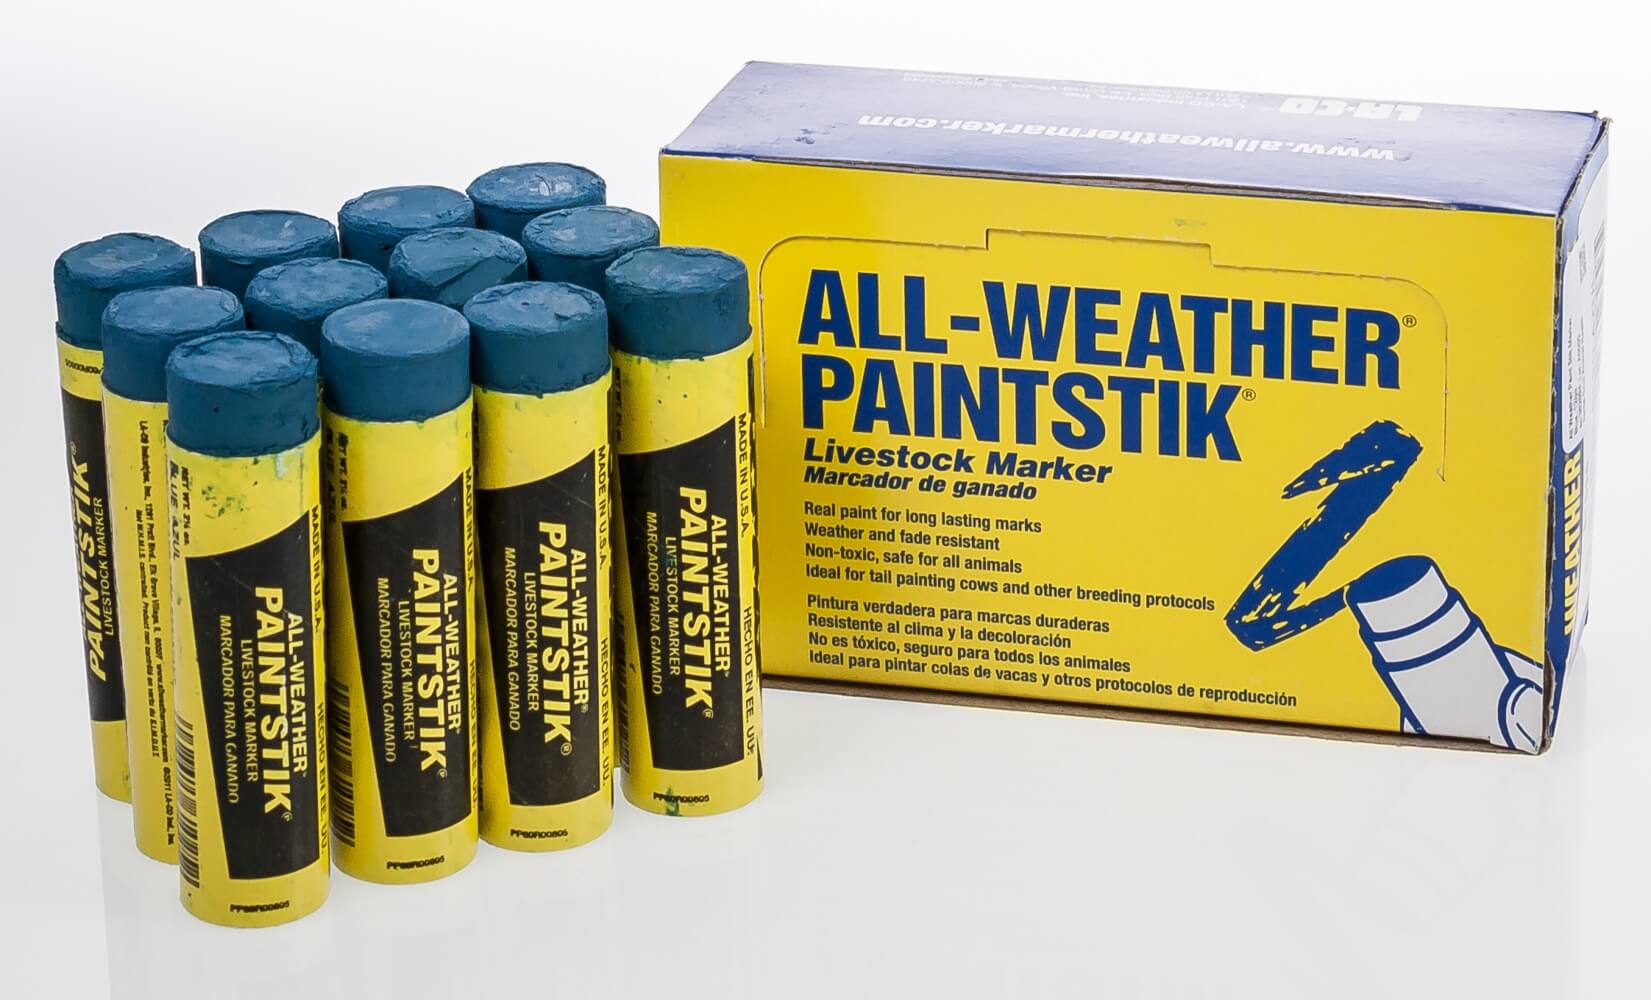 All-Weather Paintstik Livestock Marker - Green